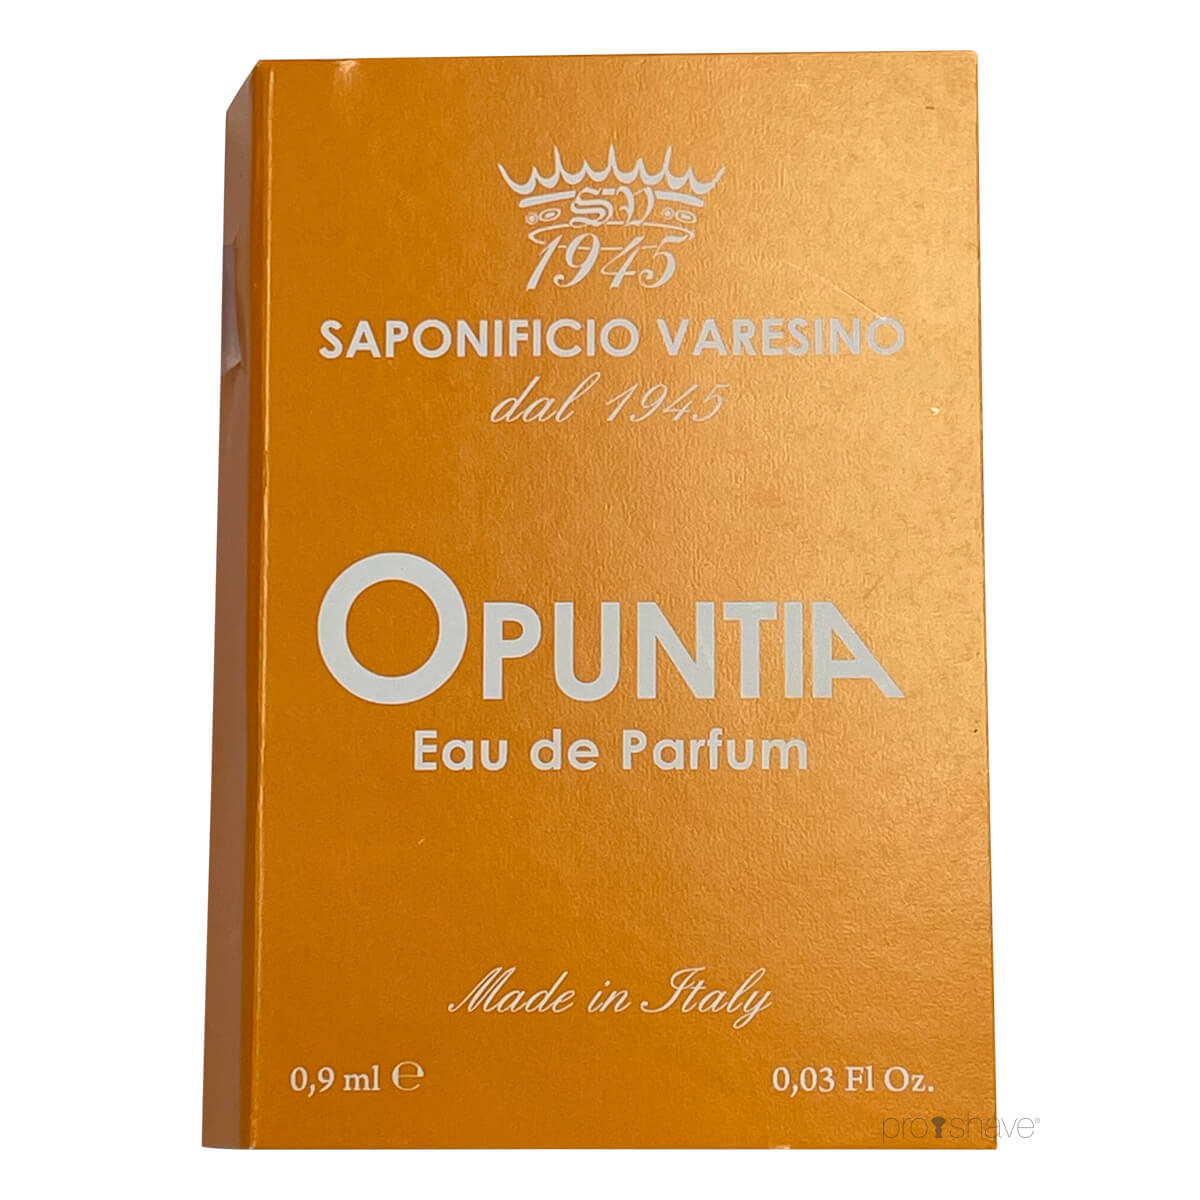 Billede af Saponificio Varesino Eau de Parfum, Opuntia, Sample, 0.9 ml.